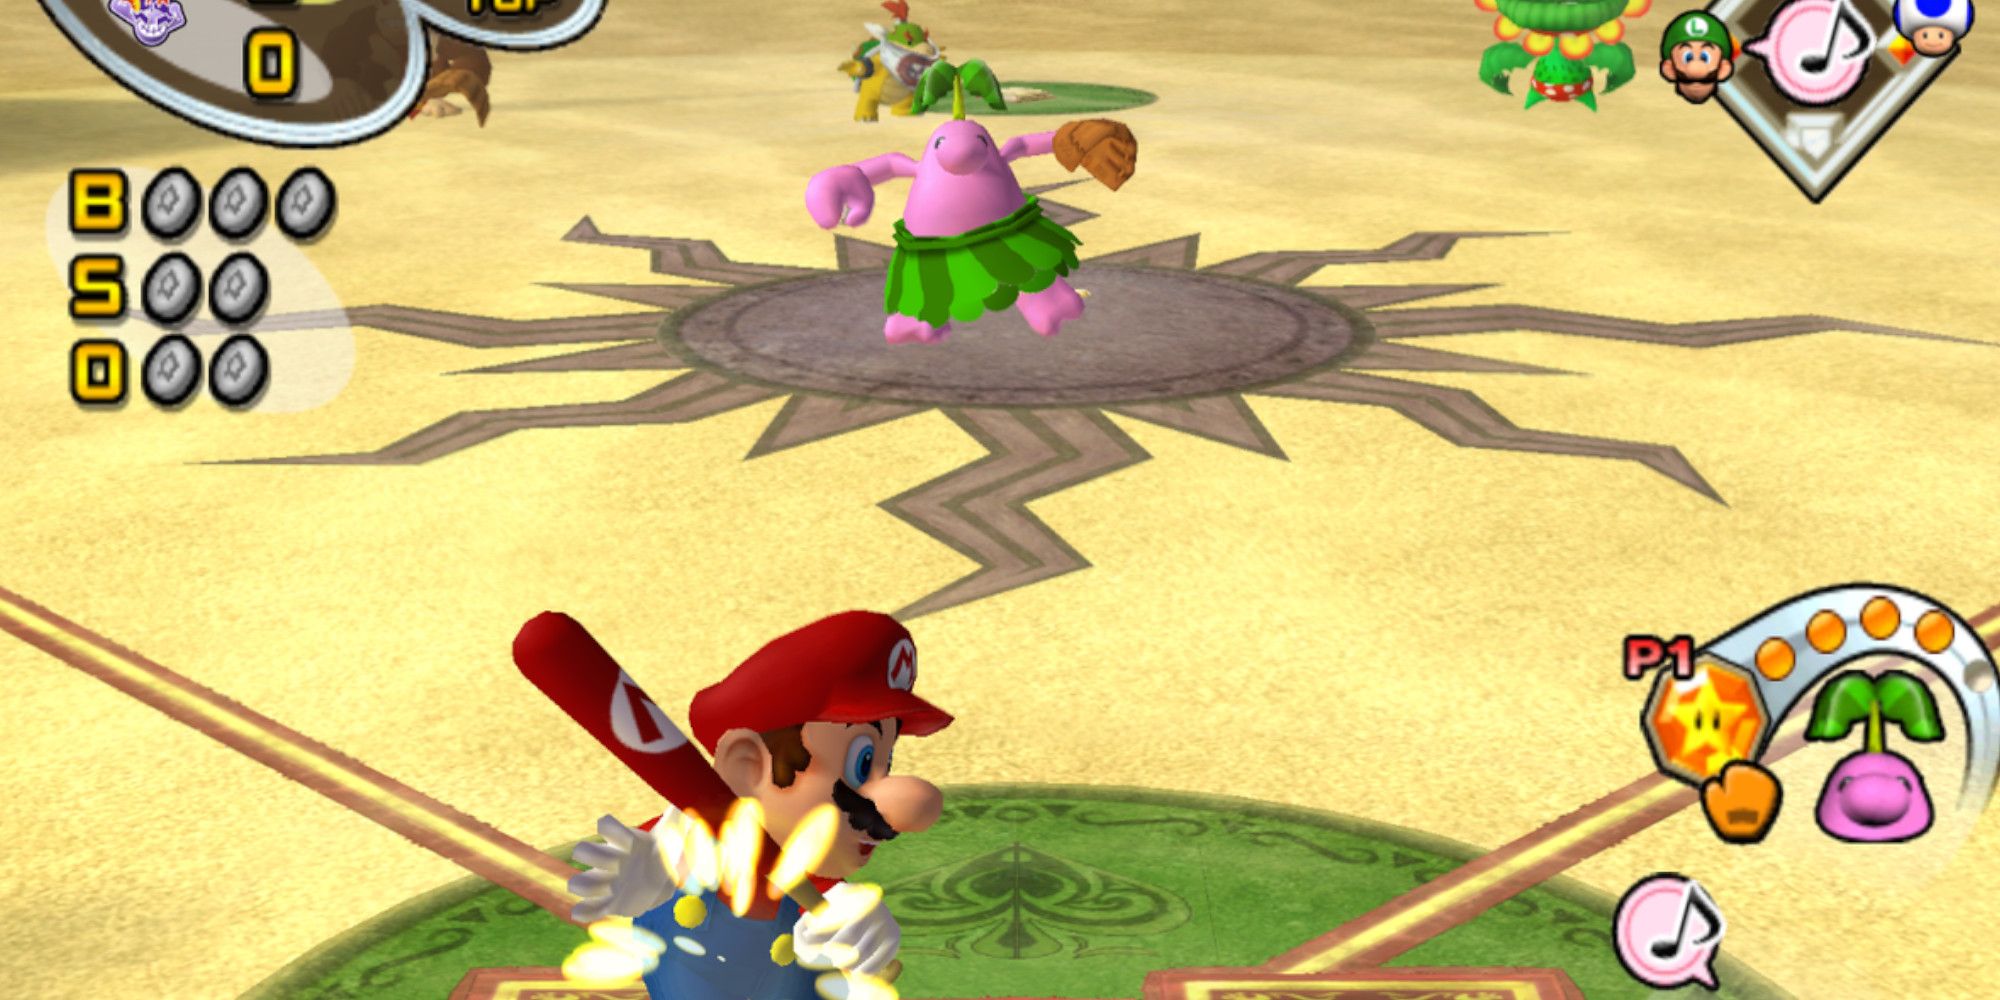 Mario competes to hit a pianta in Mario Superstar Baseball